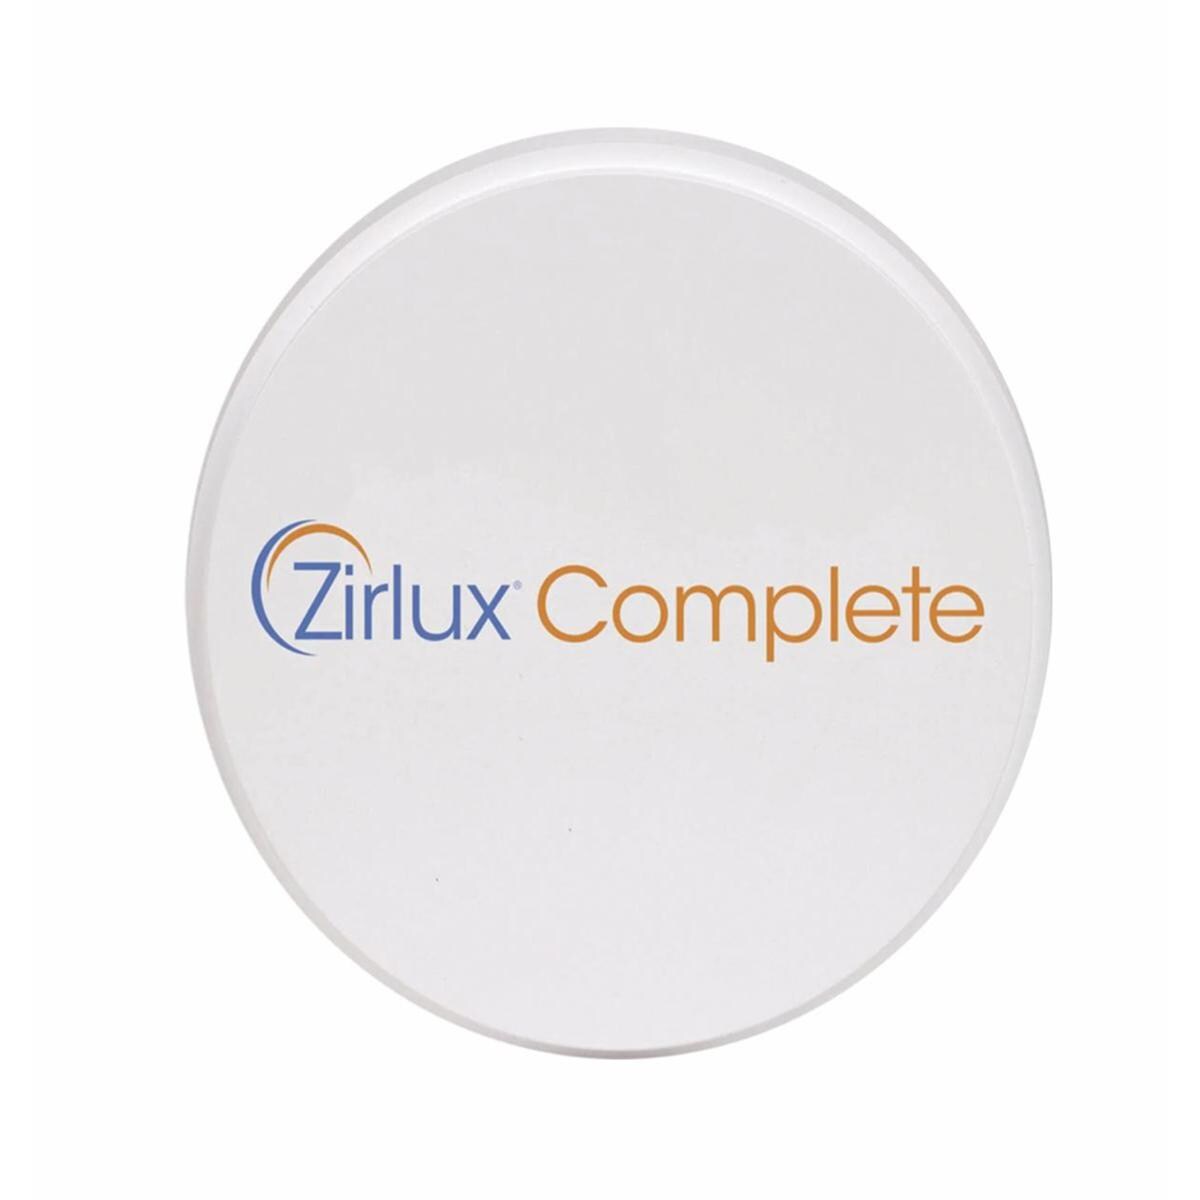 Zirlux Complete A4 98.5x18mm